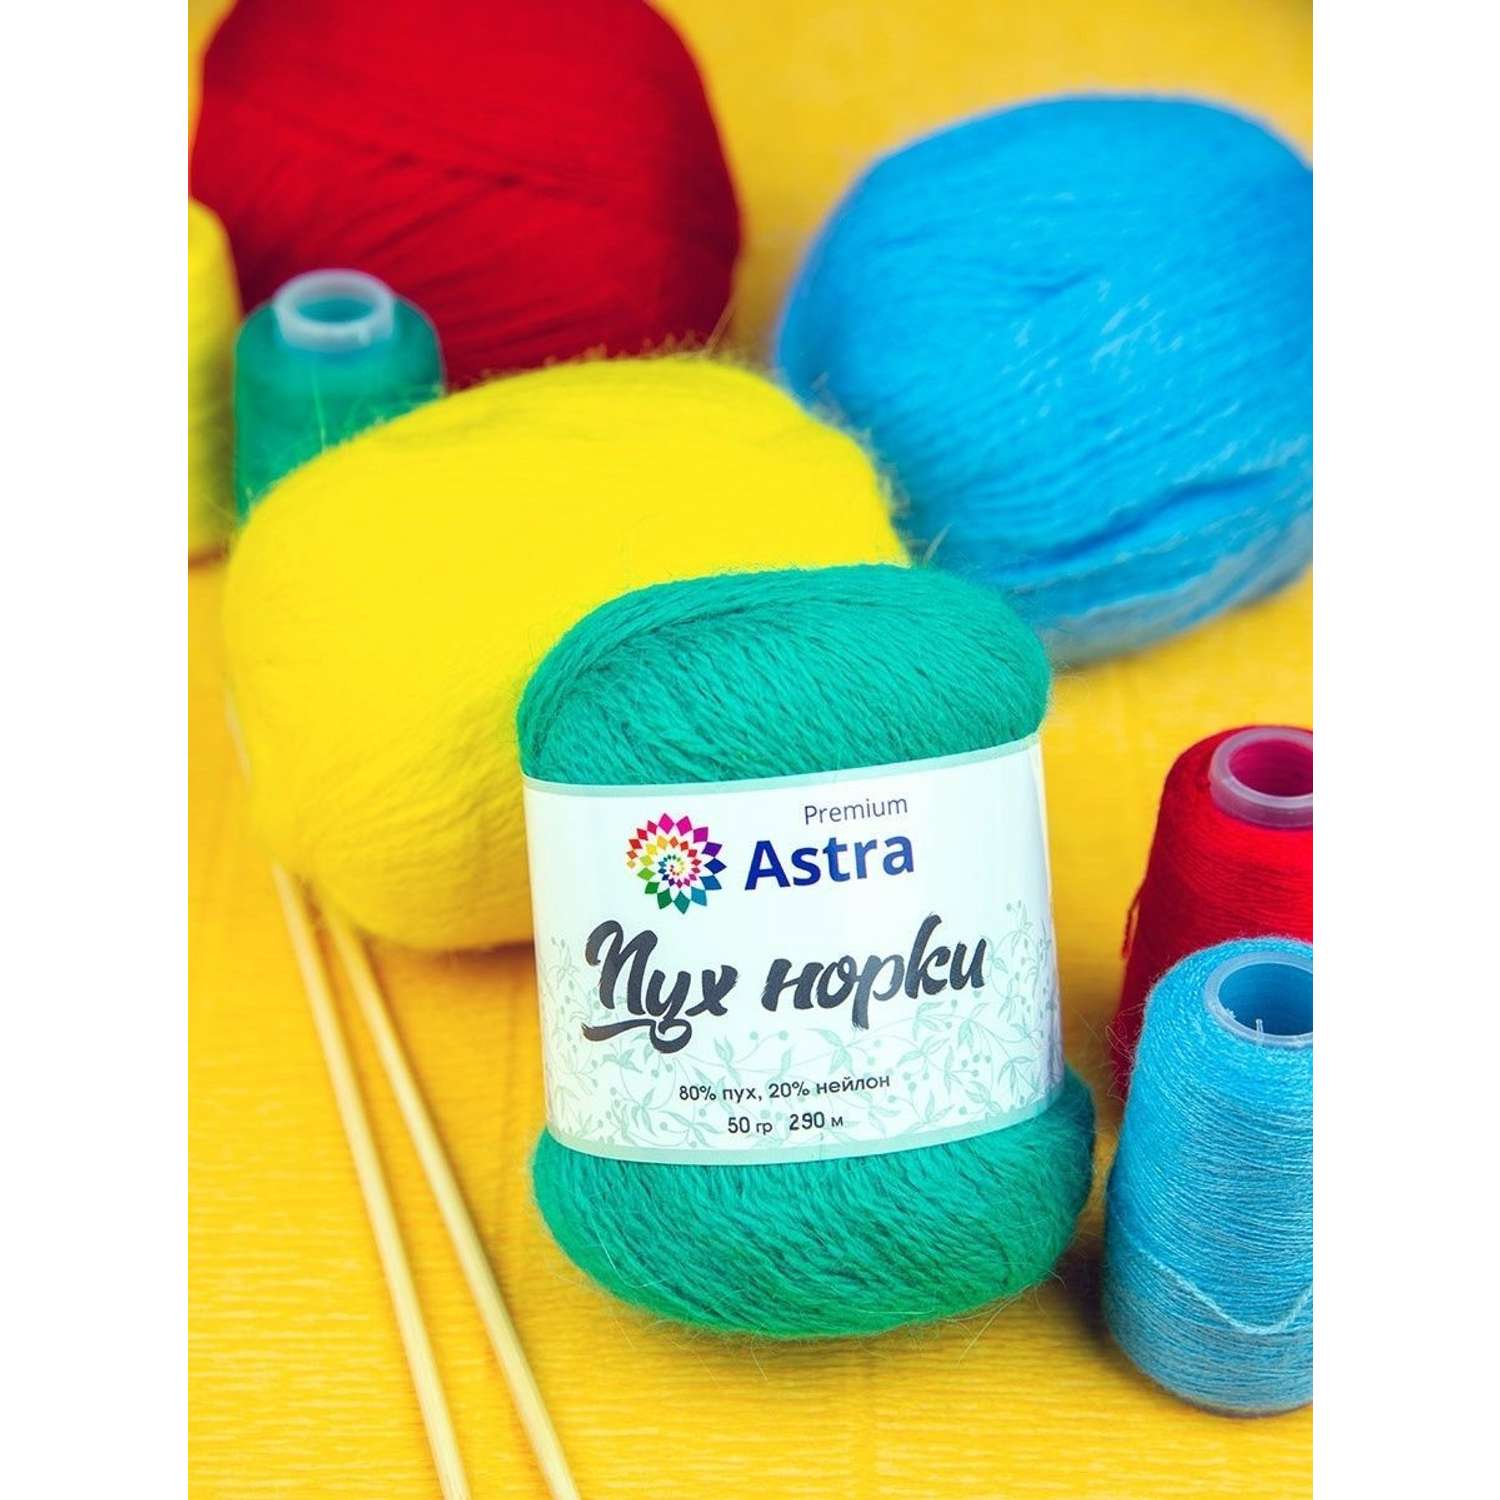 Пряжа Astra Premium Пух норки Mink yarn воздушная с ворсом 50 г 290 м 068 голубой 1 моток - фото 11